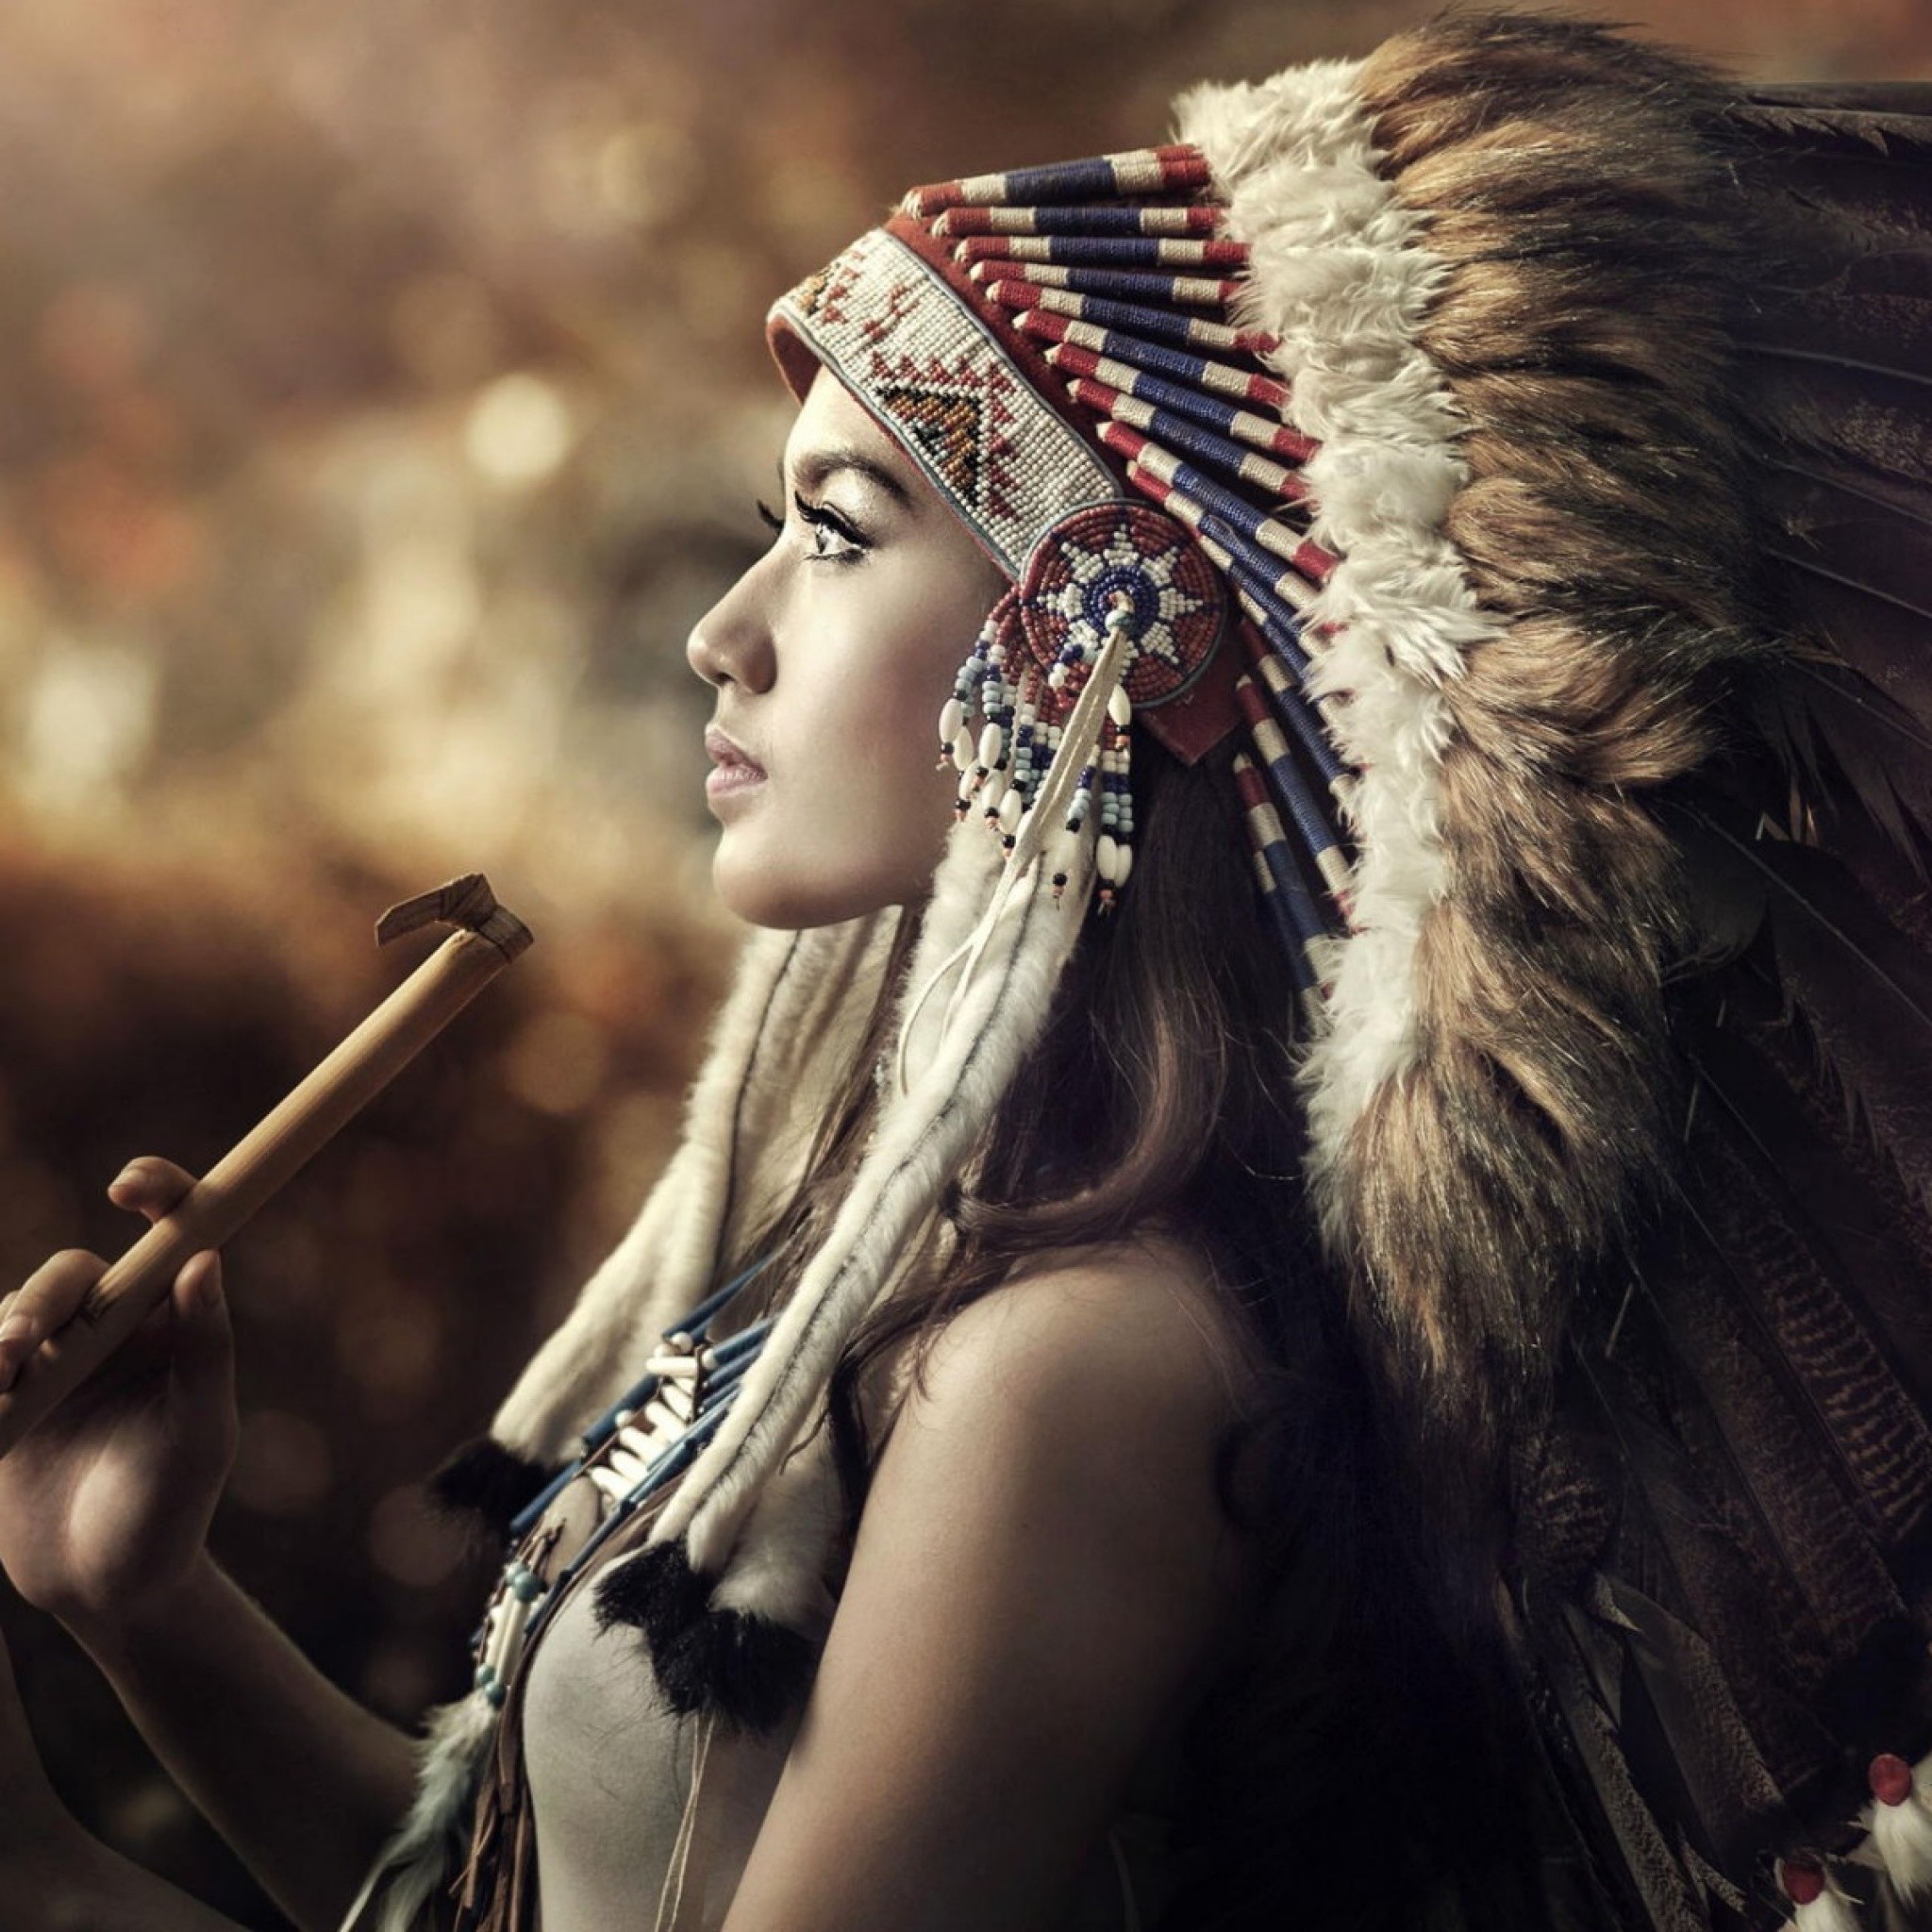 Native American Girl iPad Air wallpaper